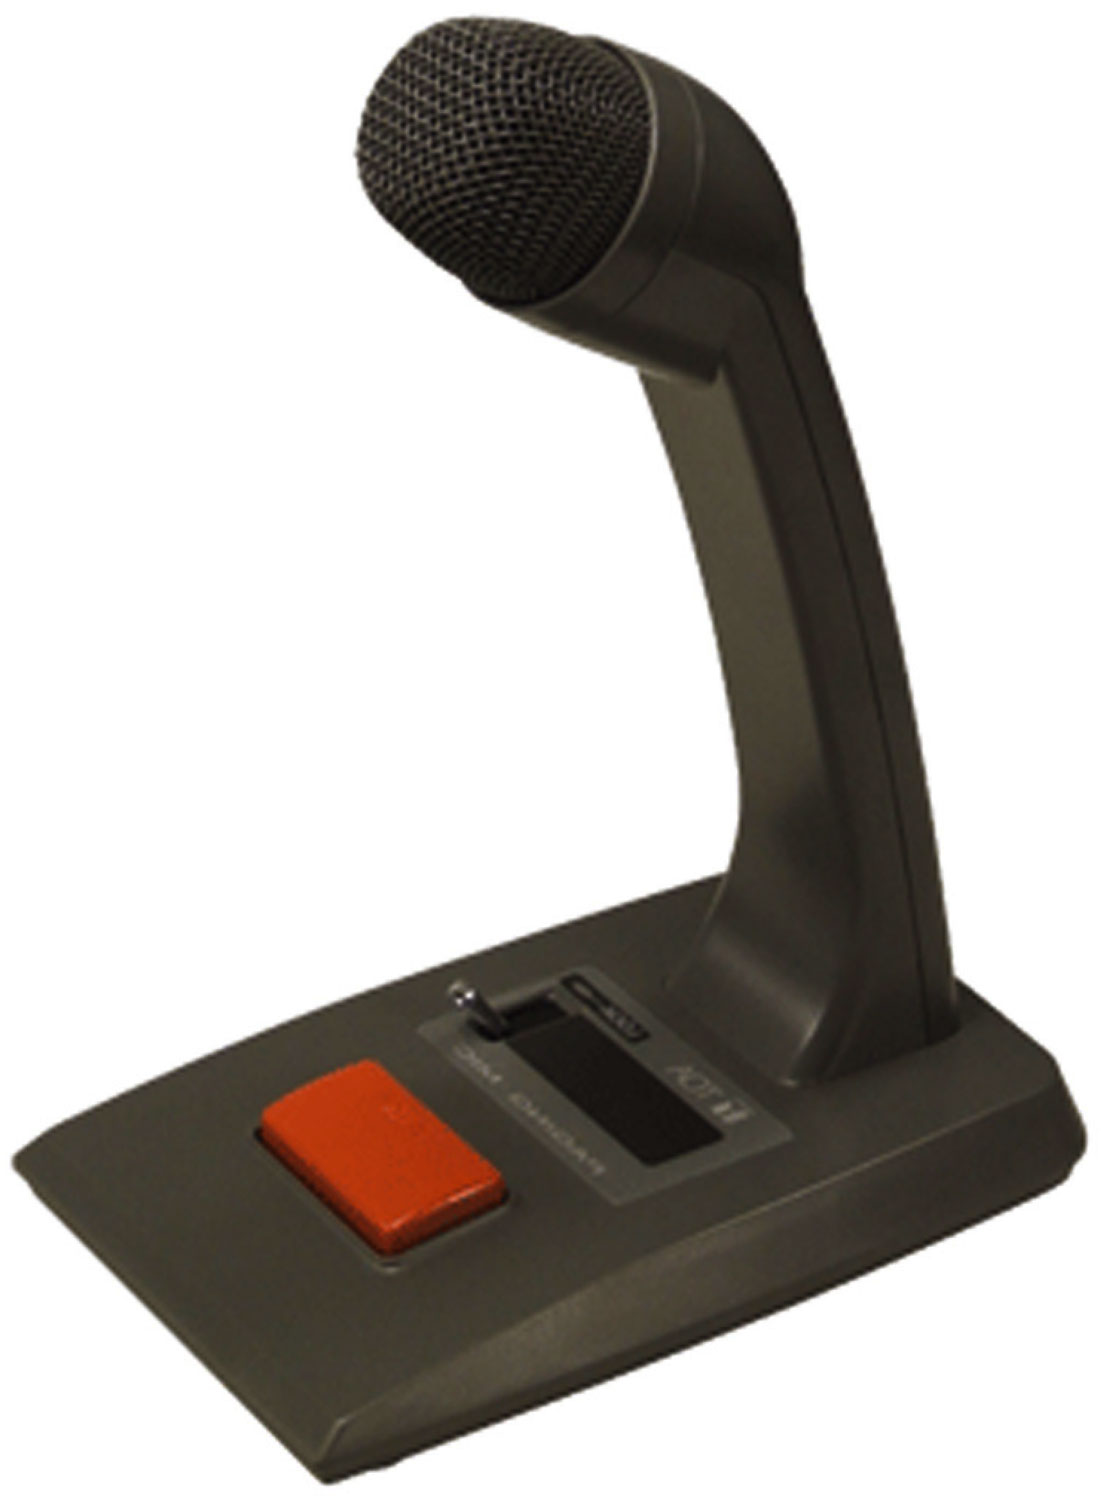 29 PM-660 - TOA Desktop Paging Microphone - 6mm Jack Plug